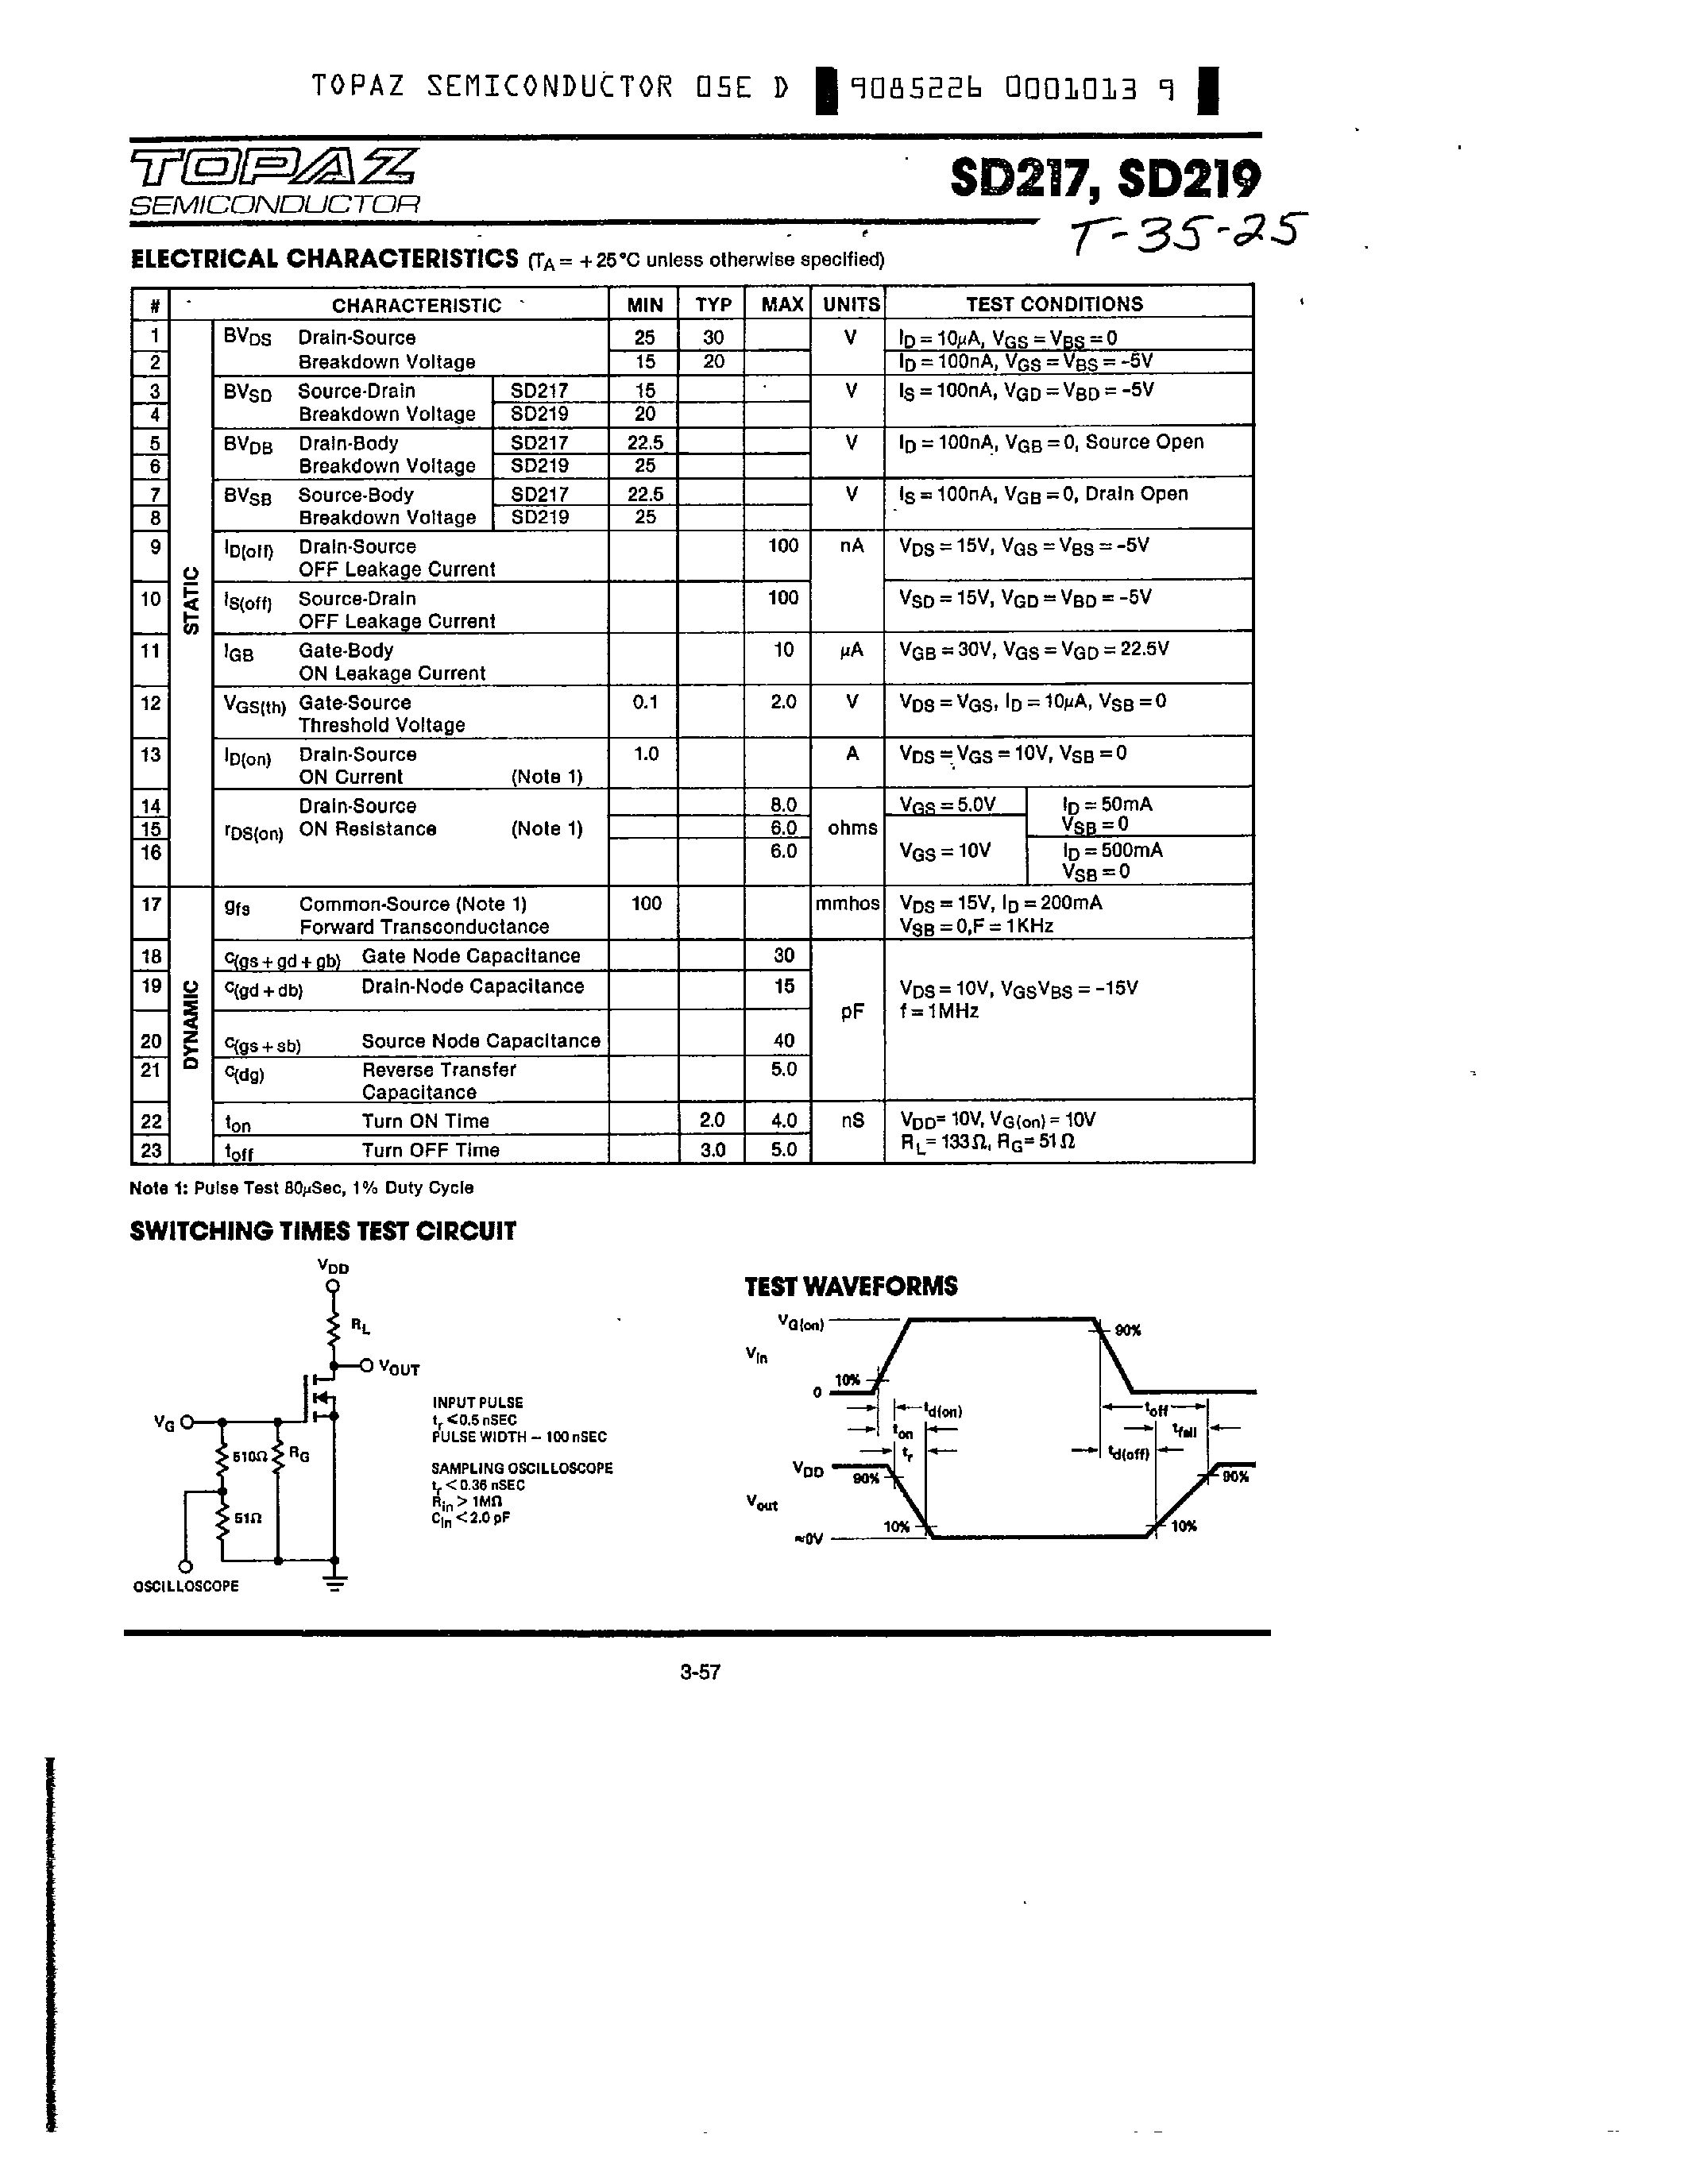 Datasheet SD217 - (SD217 / SD219) N CHANNEL ENHANCEMENT MODE D MOS POWER FET page 2